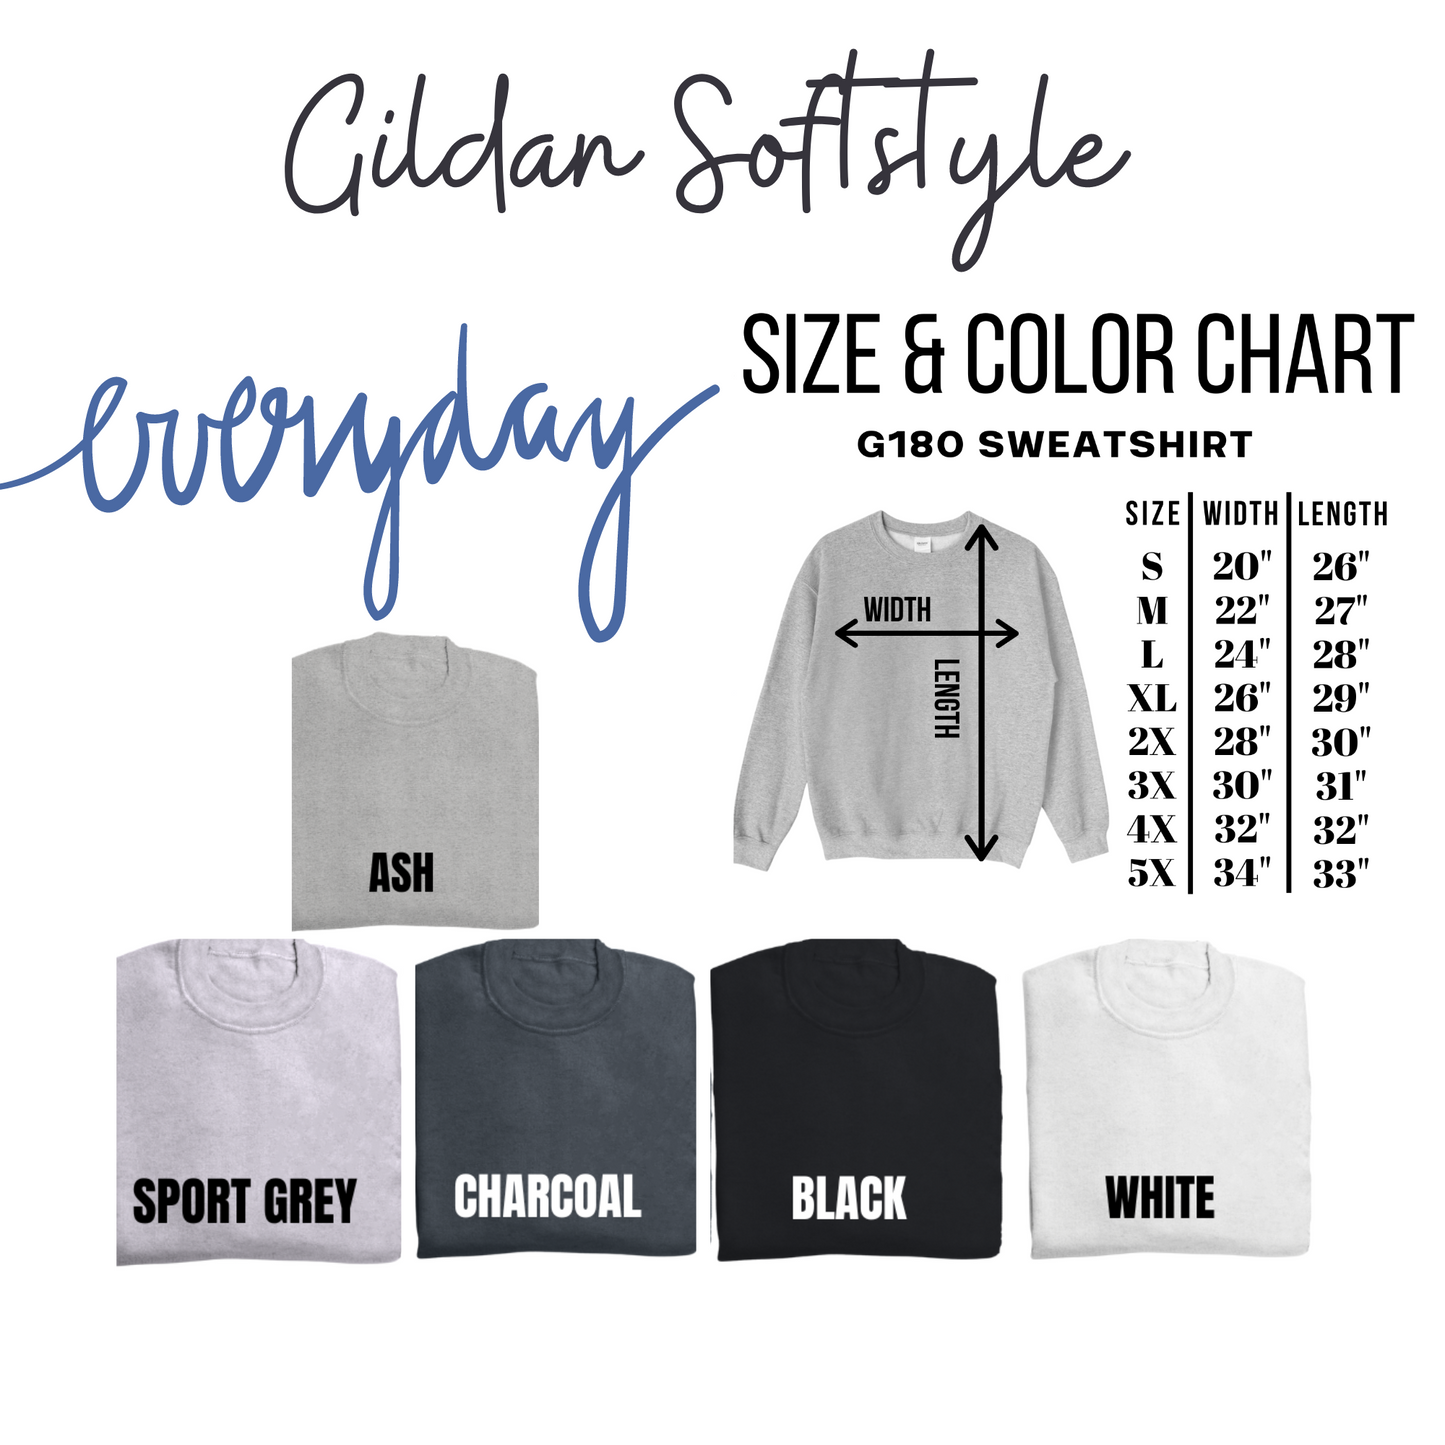 Sorry. Can't. Dance Gildan Soft style Sweatshirt or T-shirt